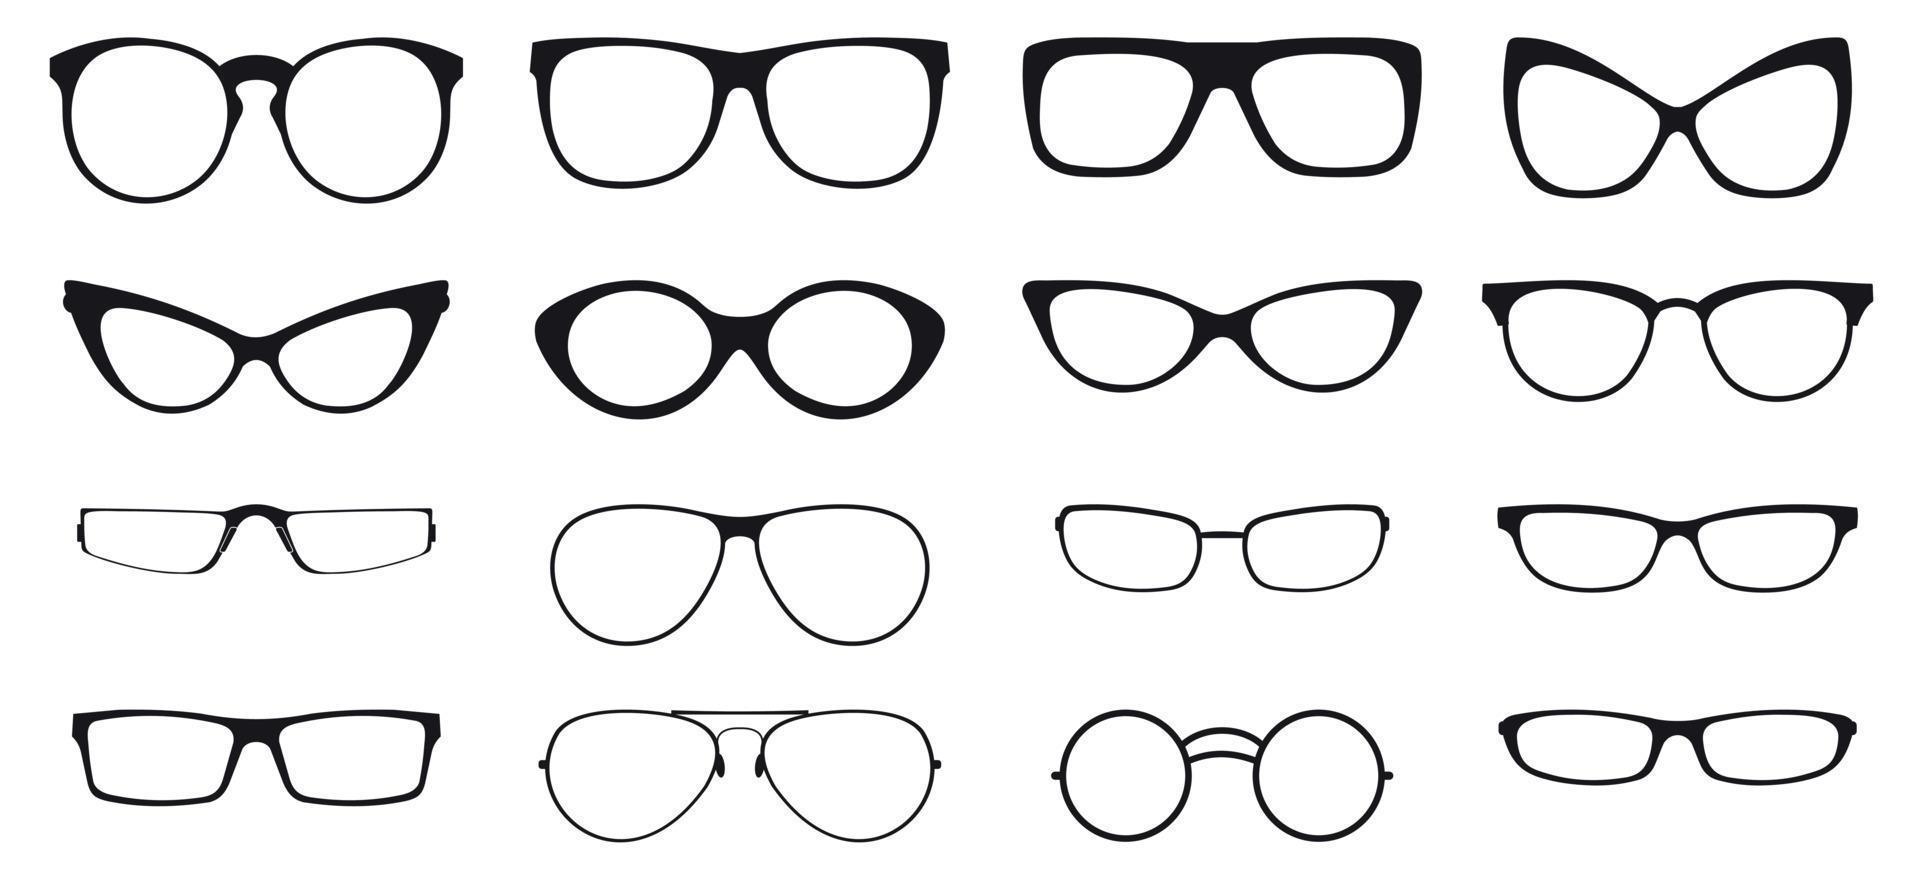 Eyeglasses silhouette set vector